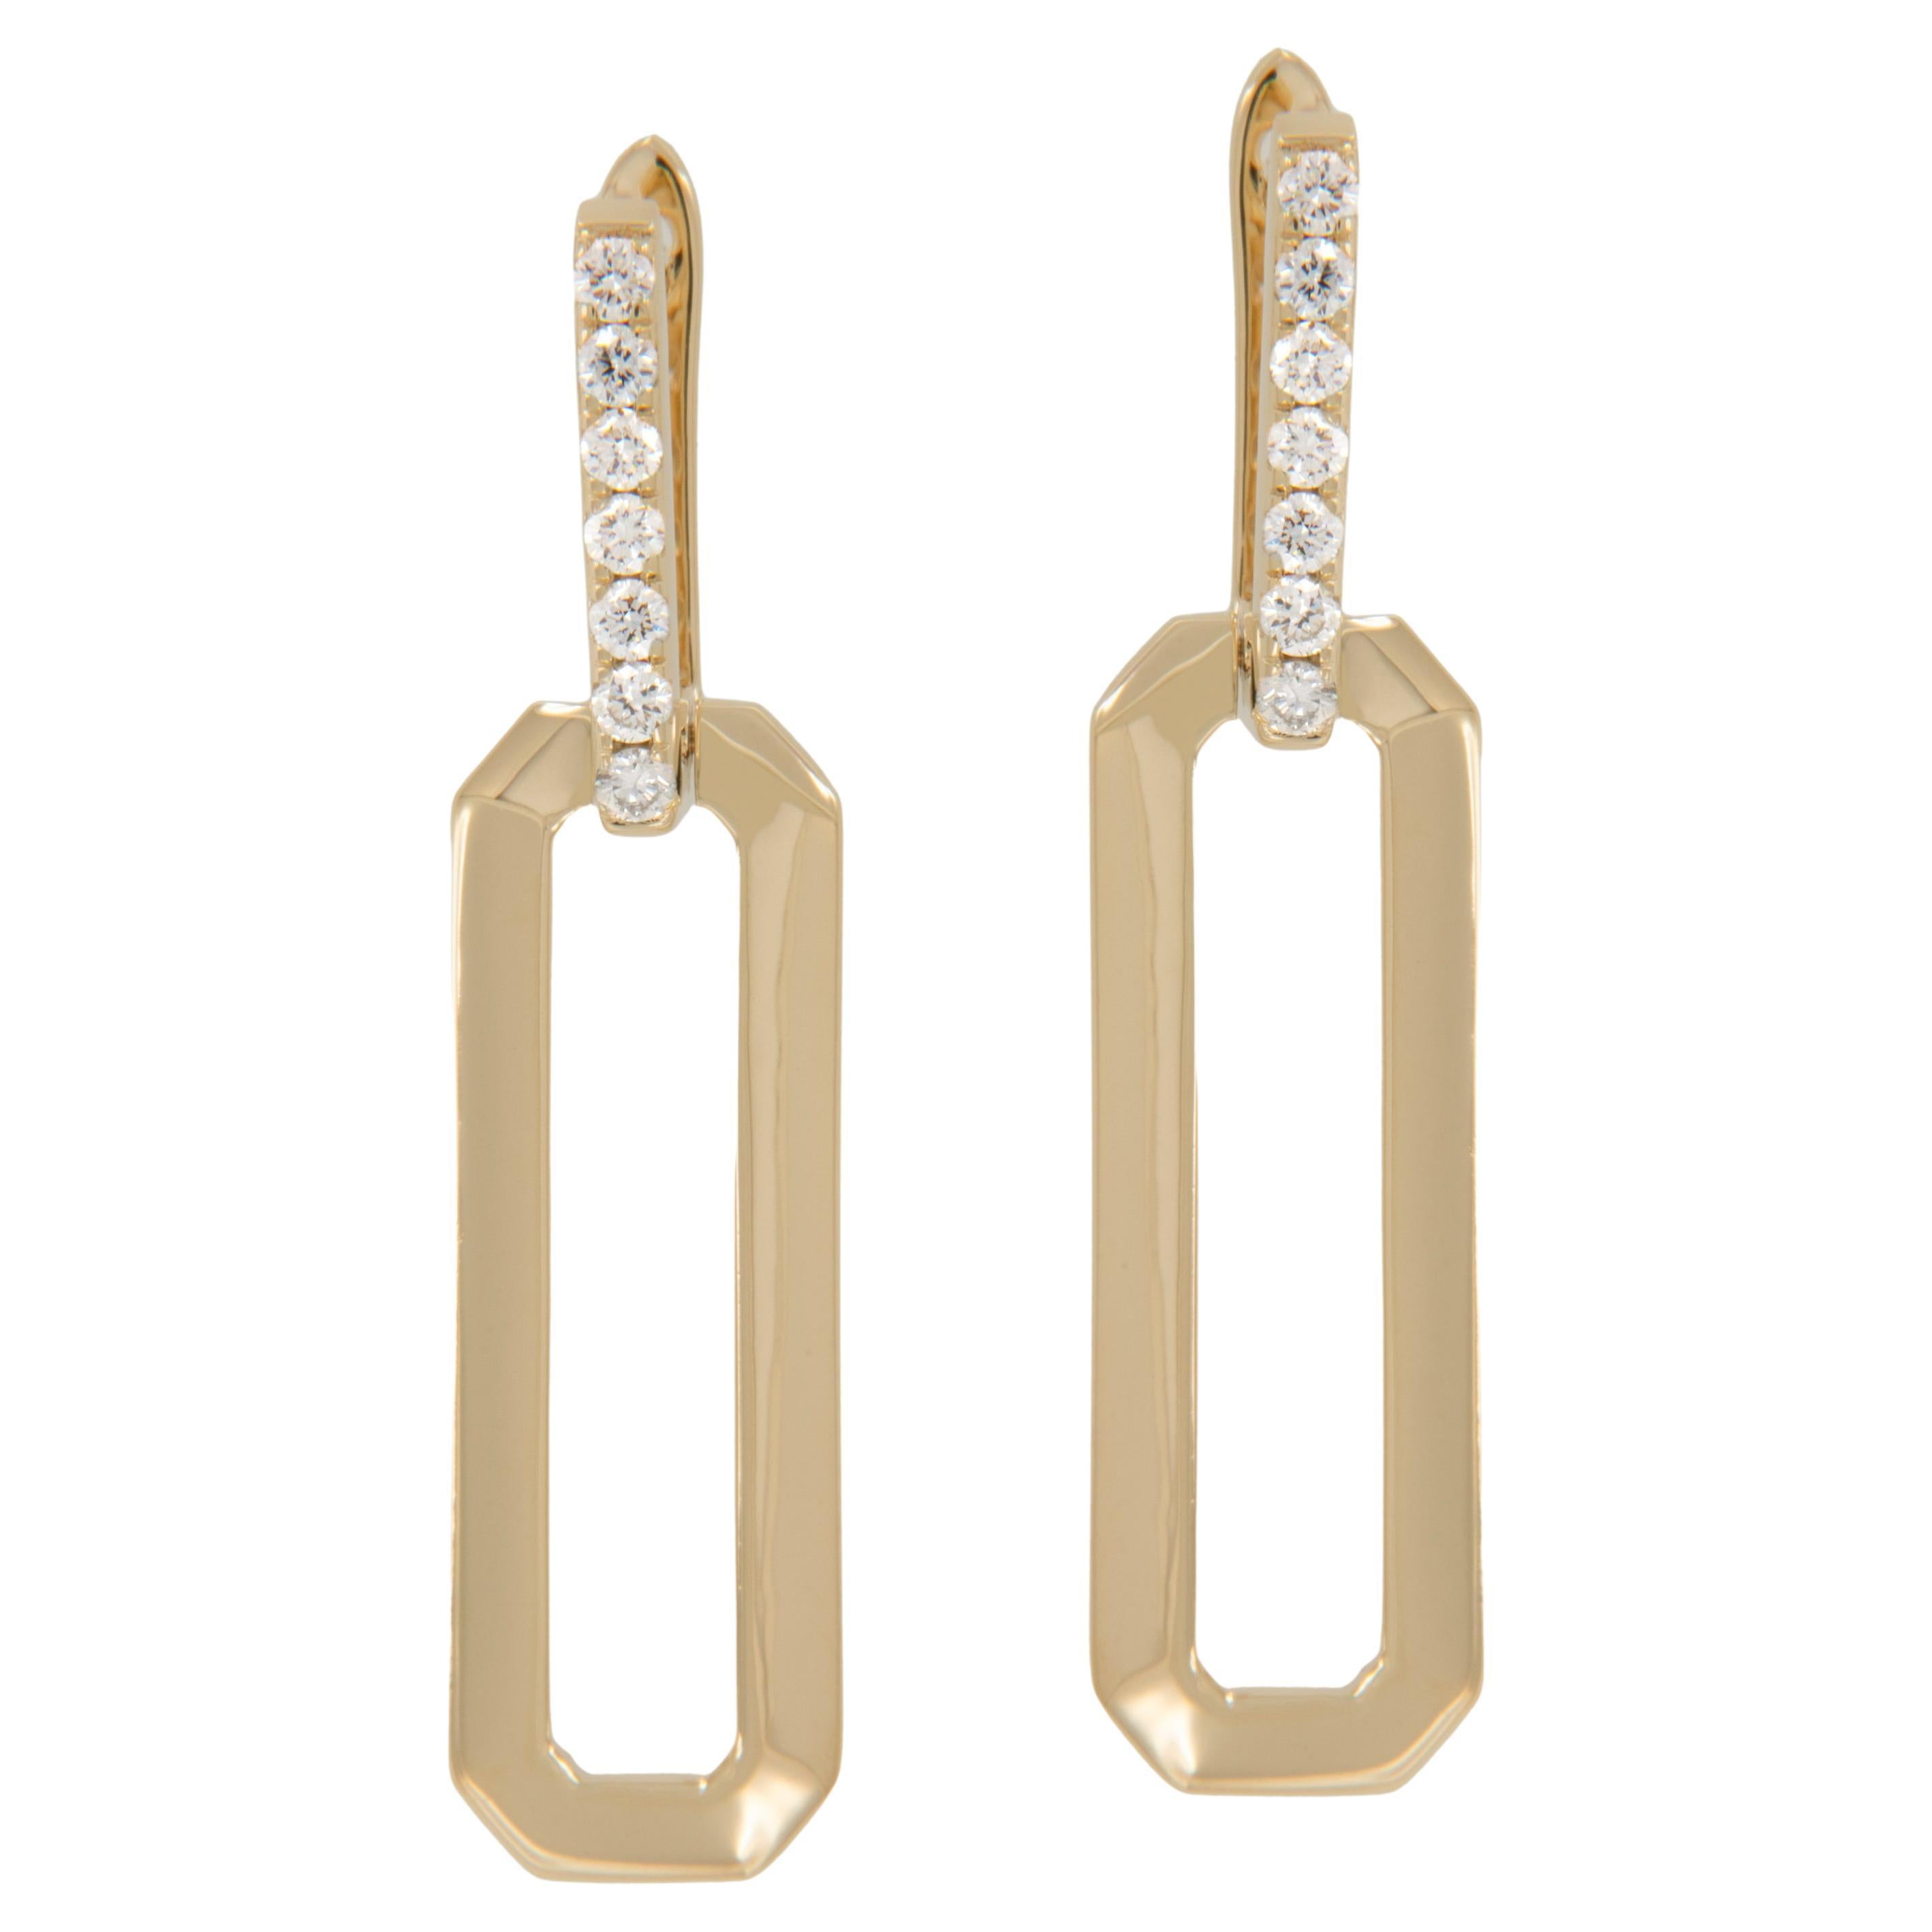 Classic 14 Karat Yellow Gold Rectangle Diamond Accented Dangle Earrings 